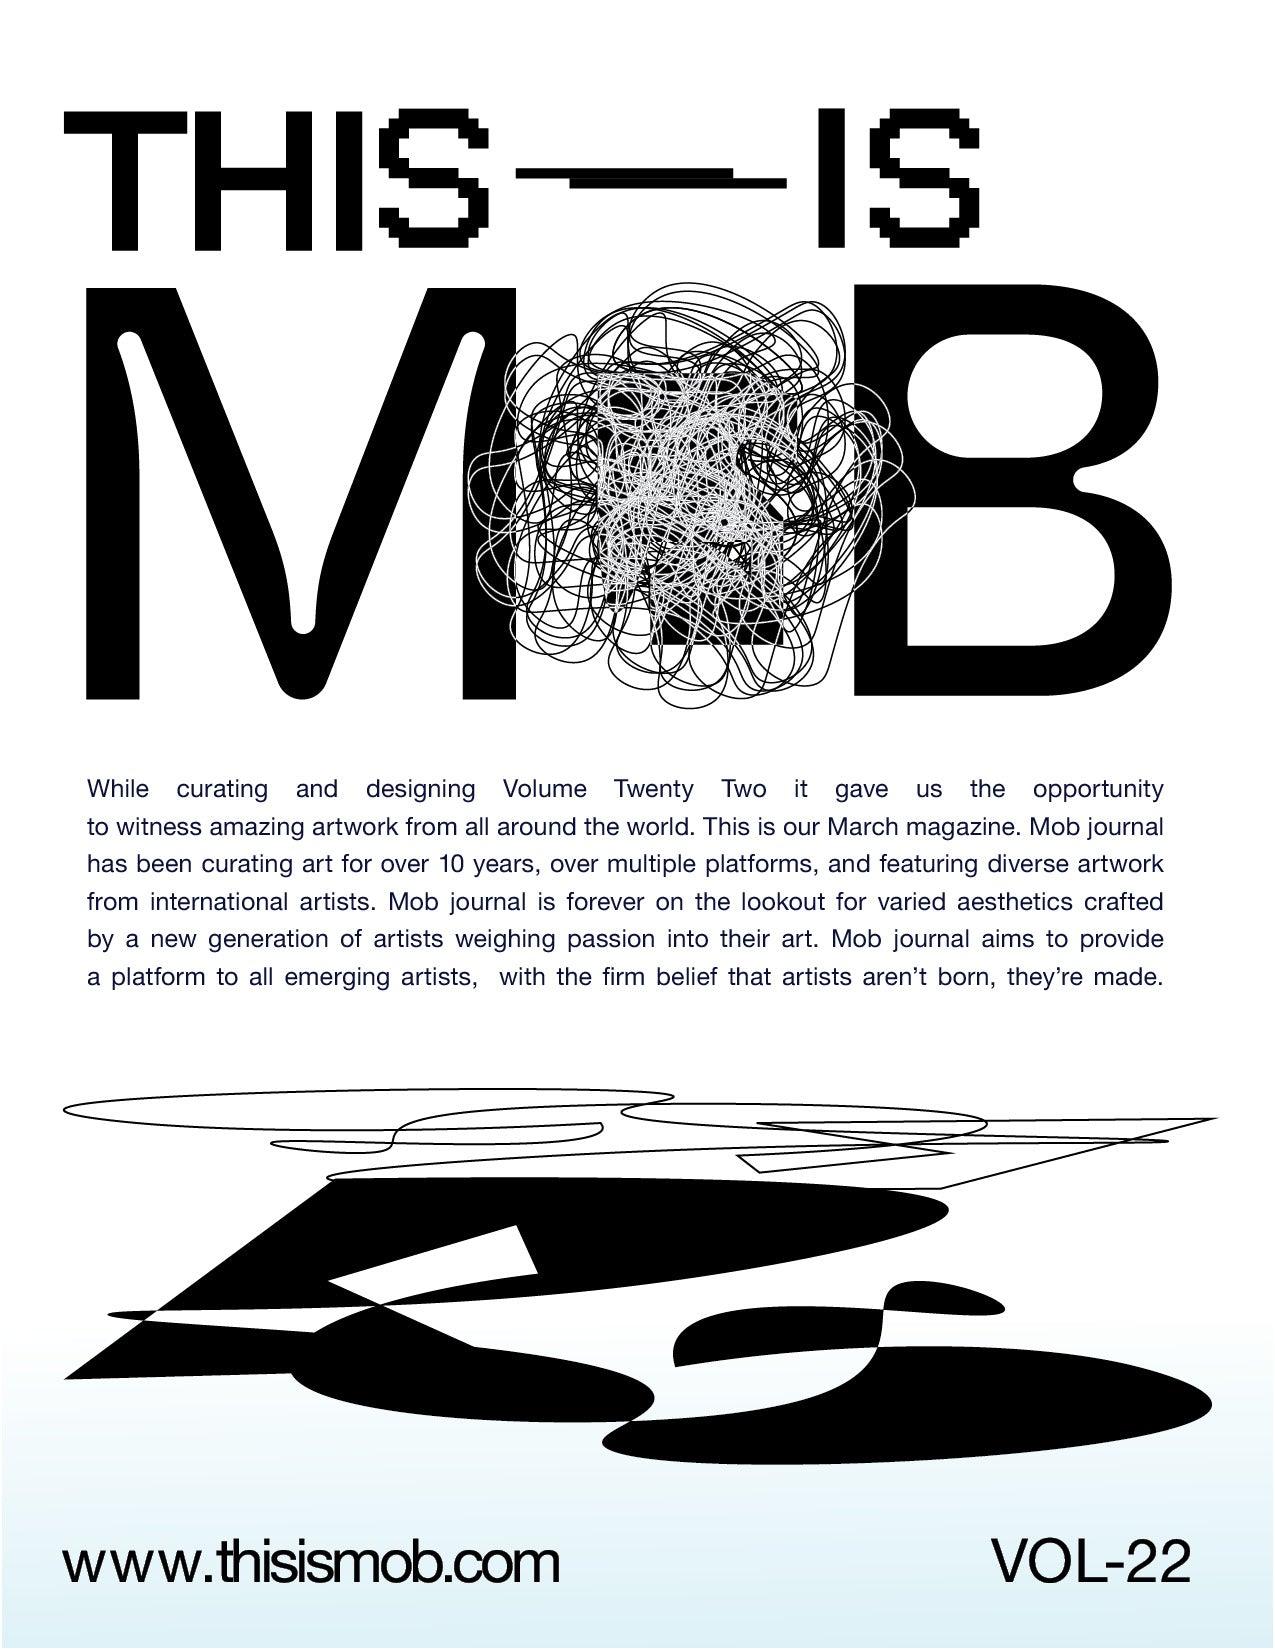 MOB JOURNAL | VOLUME TWENTY TWO | ISSUE #35 - Mob Journal